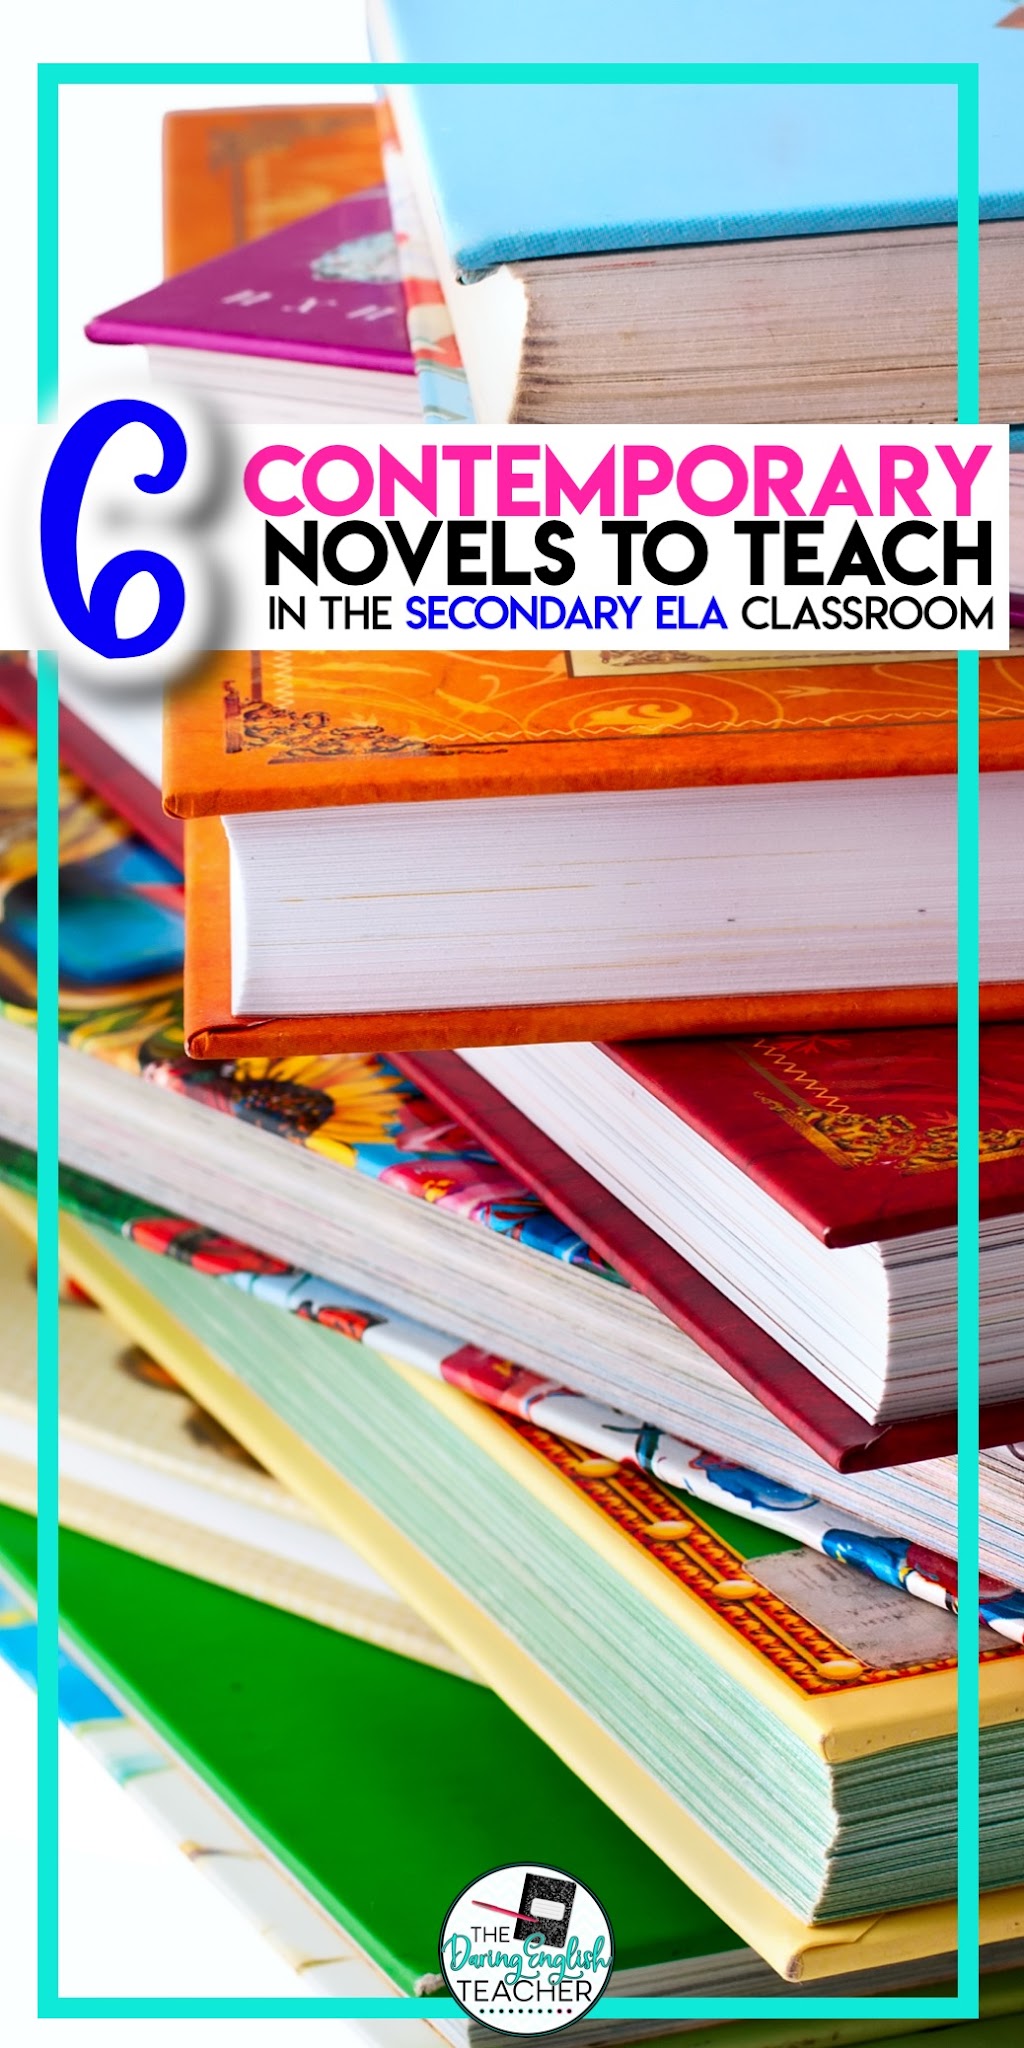 6 Contemporary Novels to Teach in the Secondary ELA Classroom